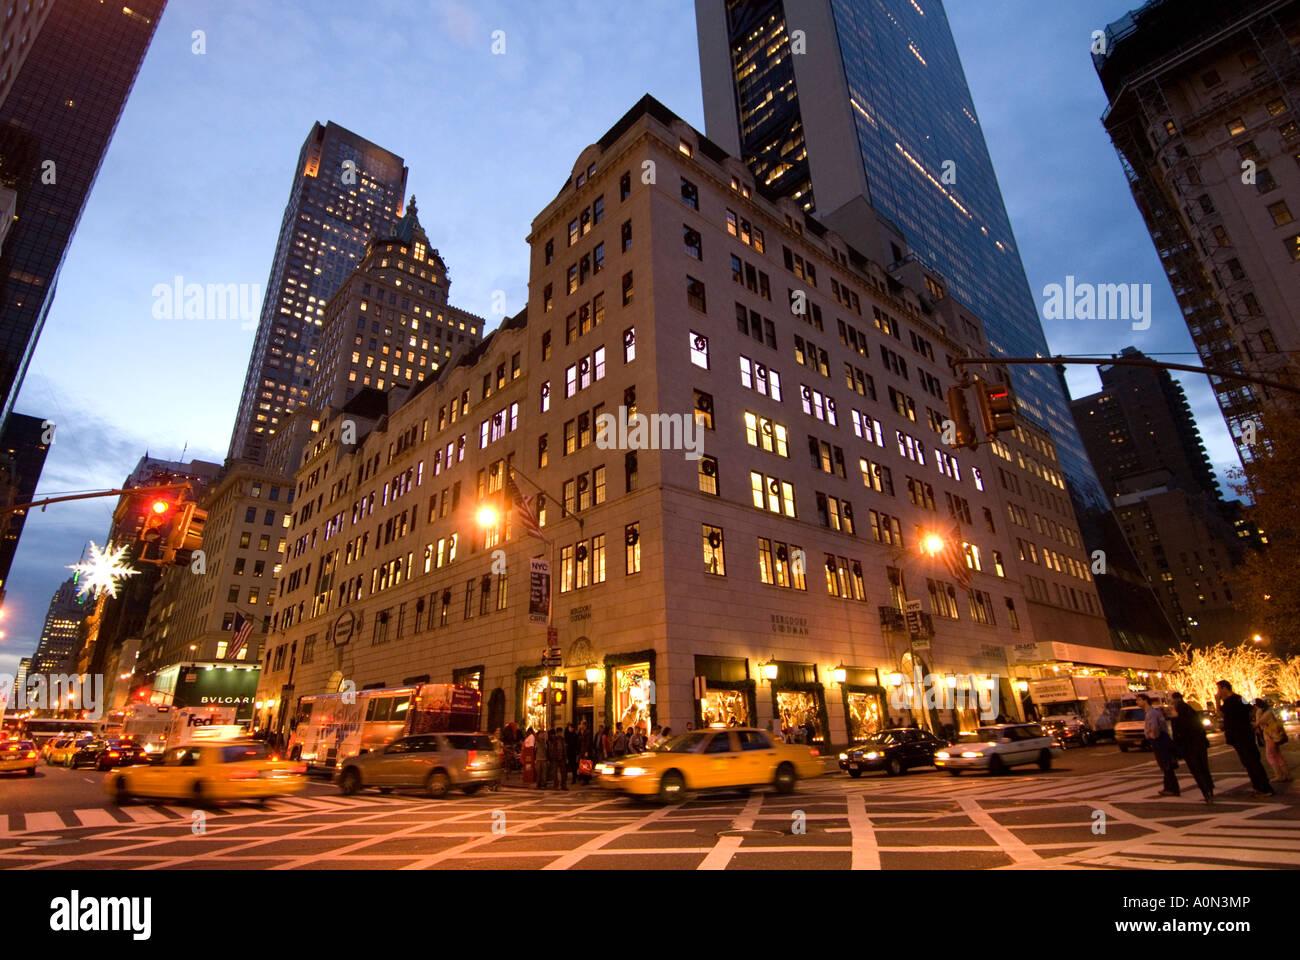 BG - Bergdorf Goodman  New York, New York, United States - Venue Report